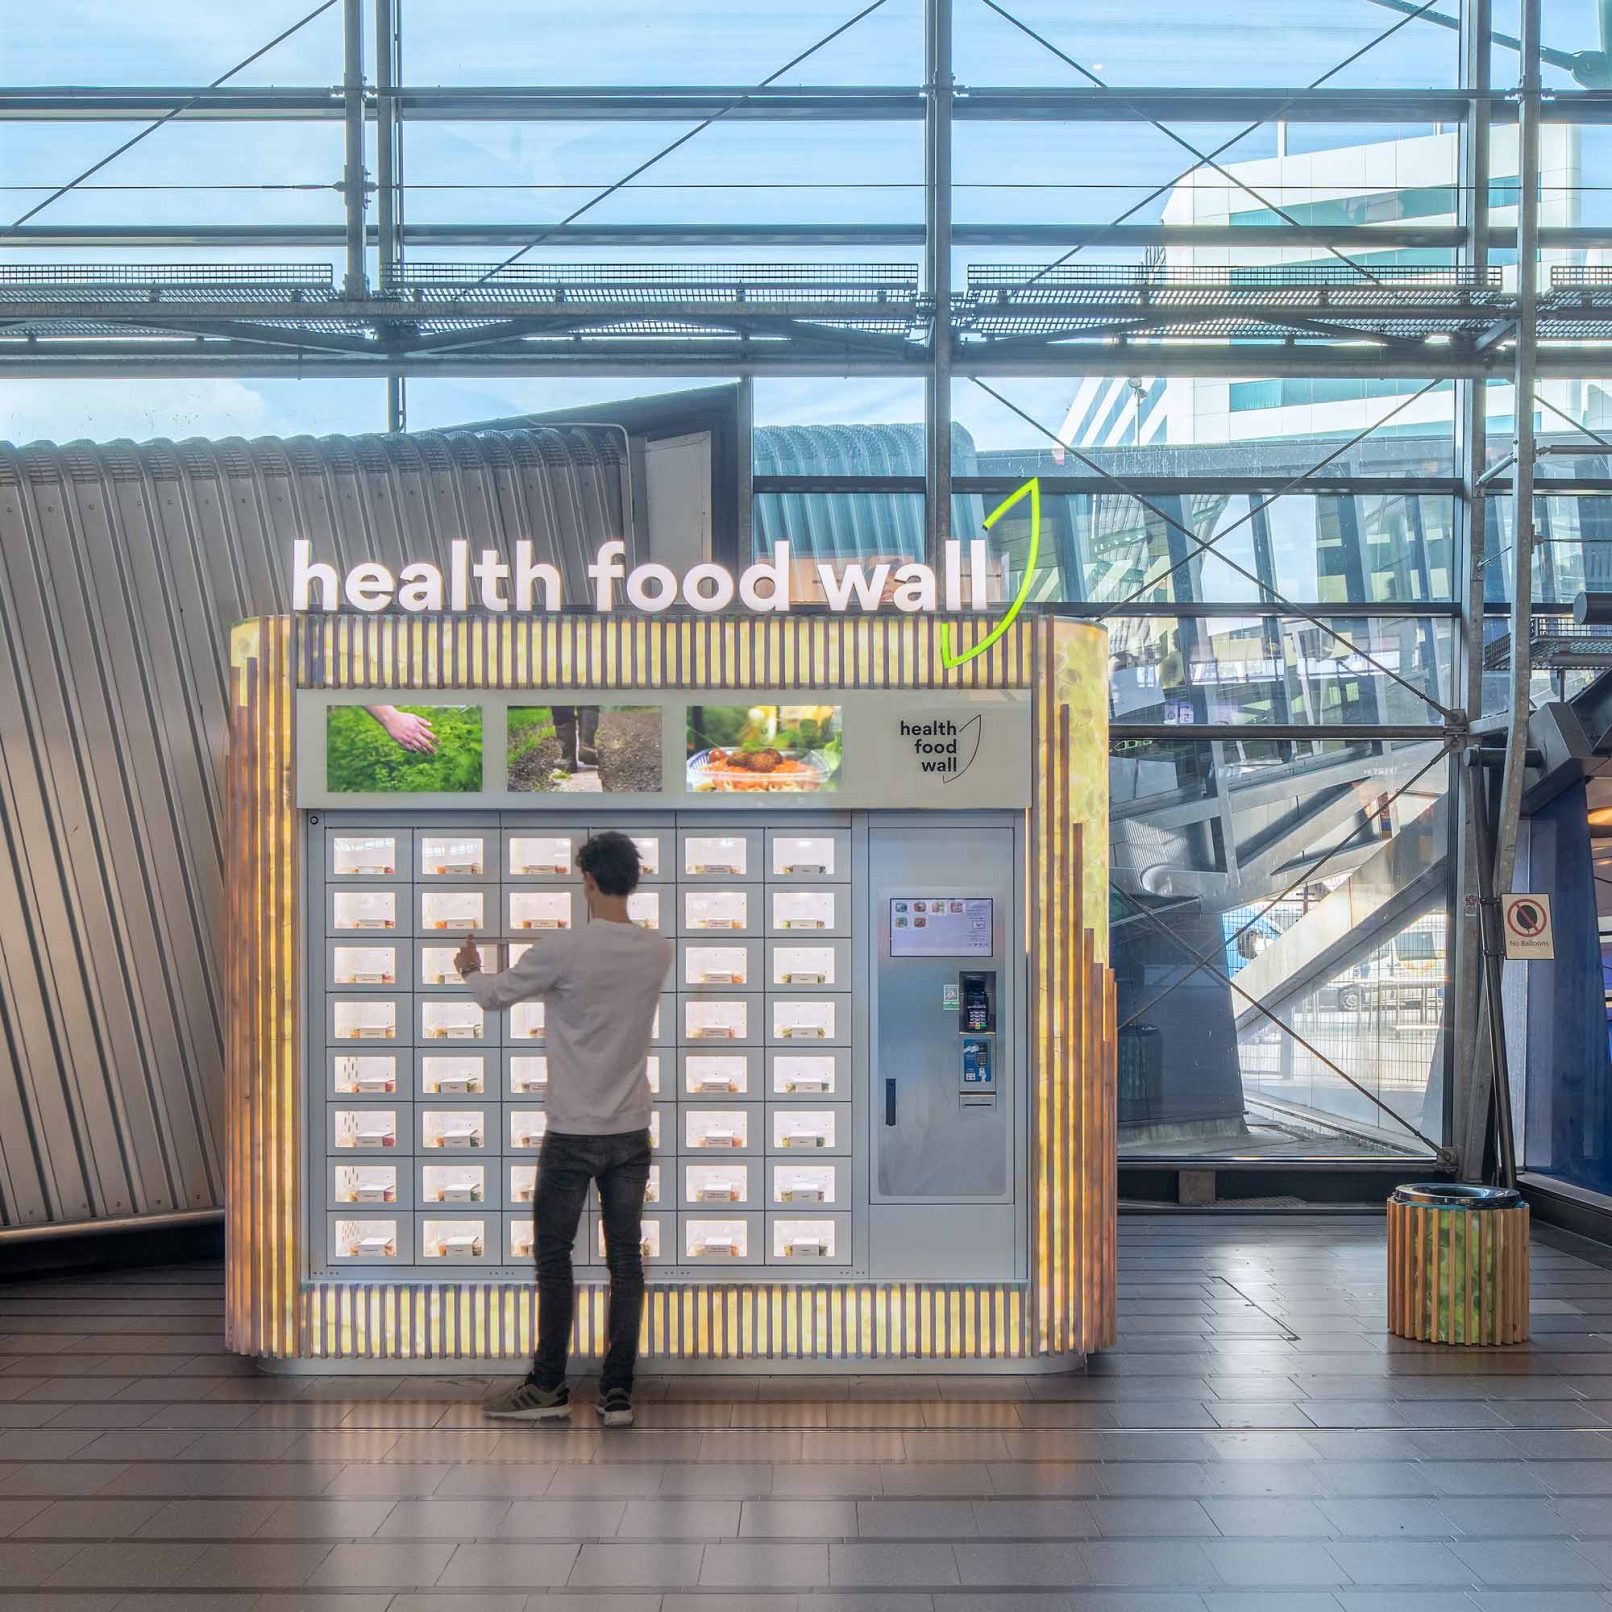 Health Food Wall by Standard Studio